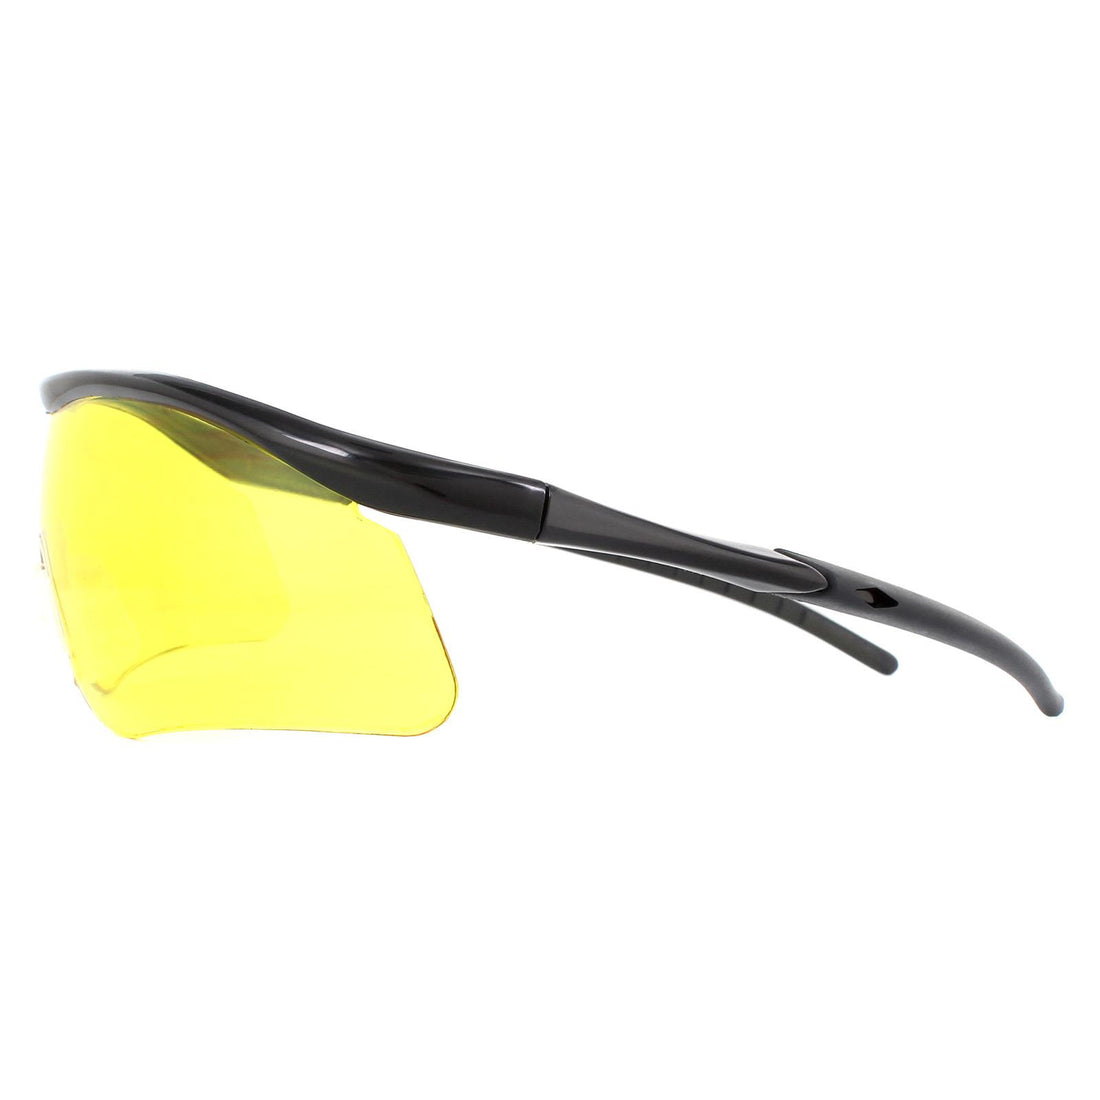 Eyelevel Impact Shooting Safety Glasses Sunglasses Black Yellow Shatterproof